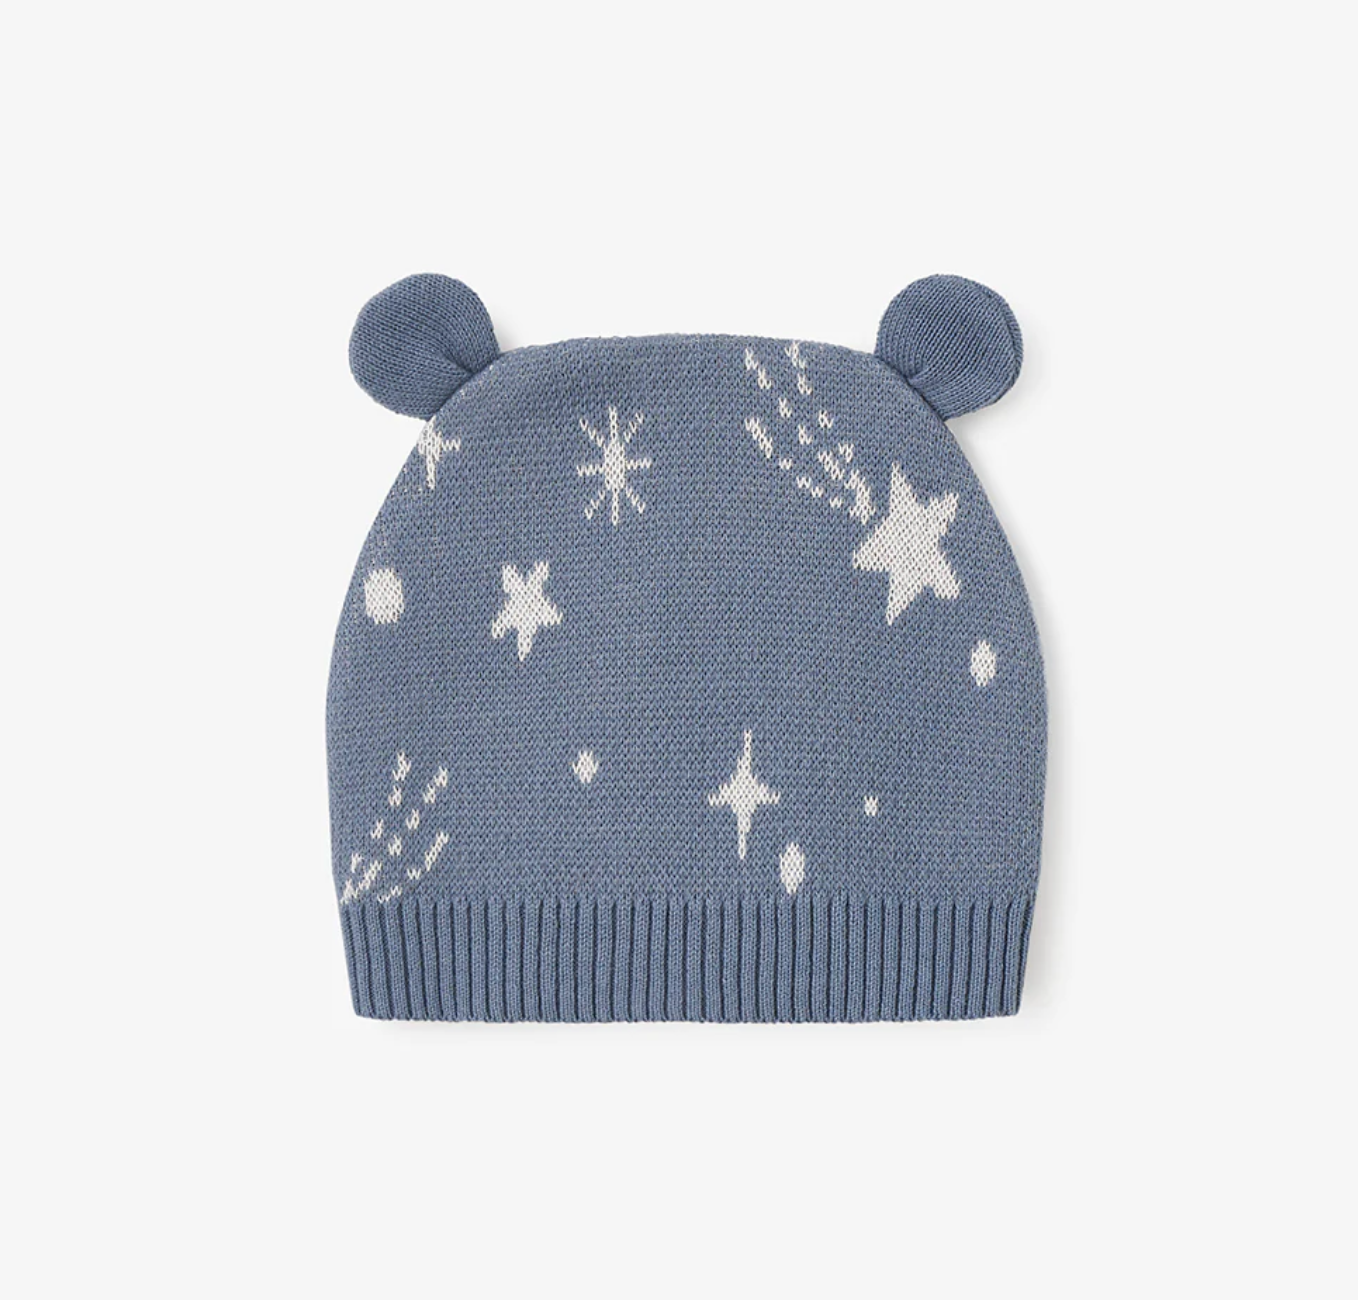 Celestial Knit Baby Hat 0-12M